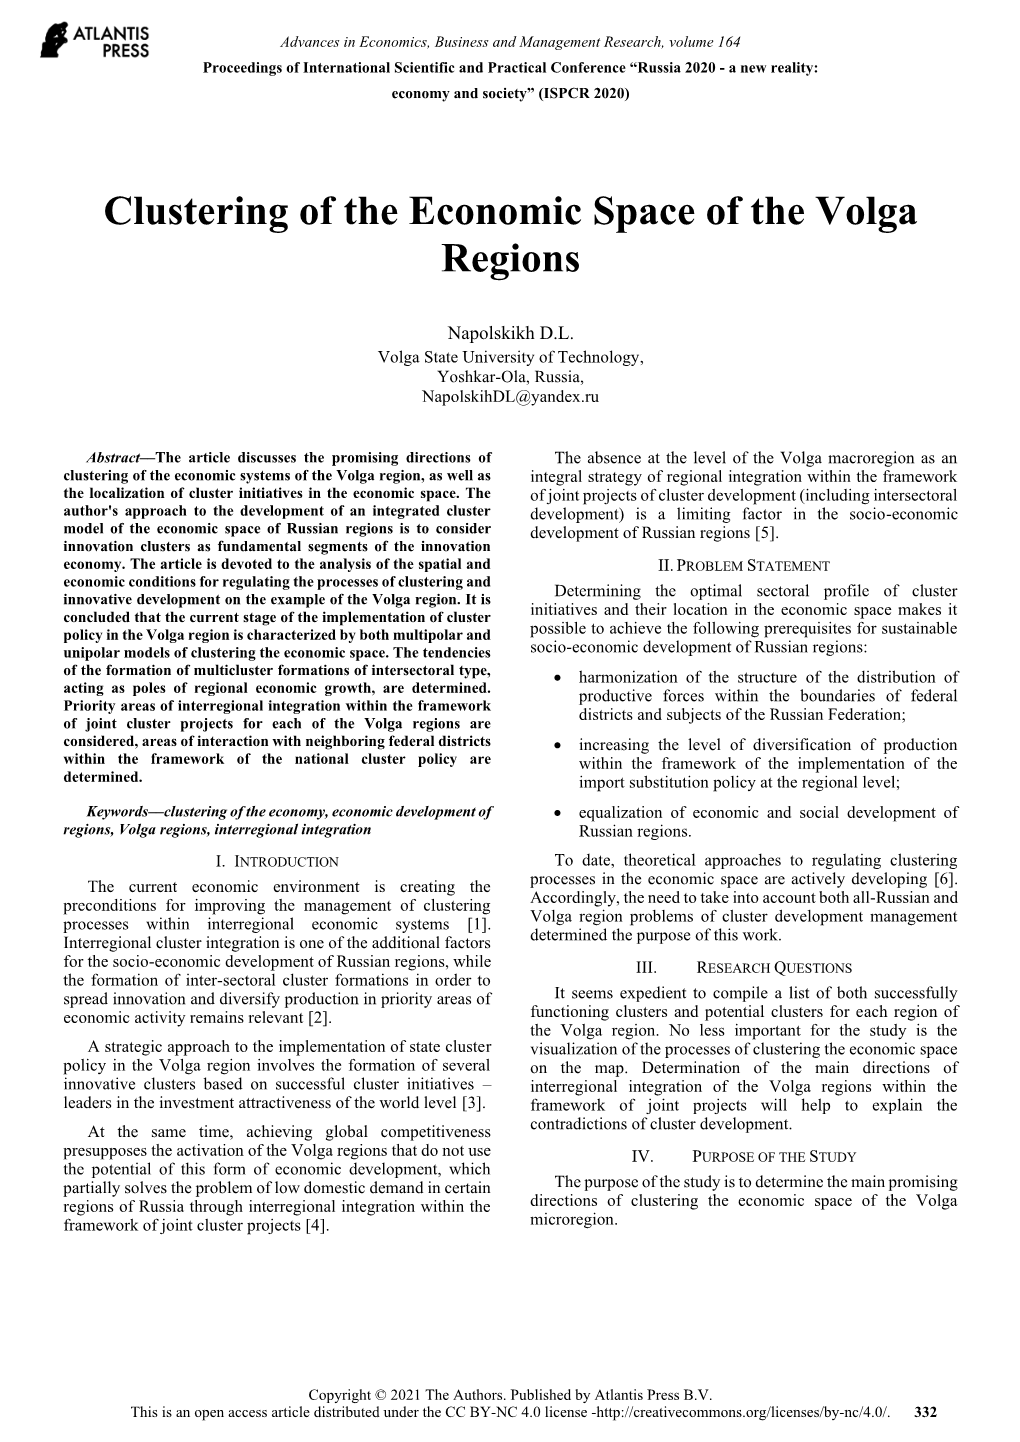 Clustering of the Economic Space of the Volga Regions